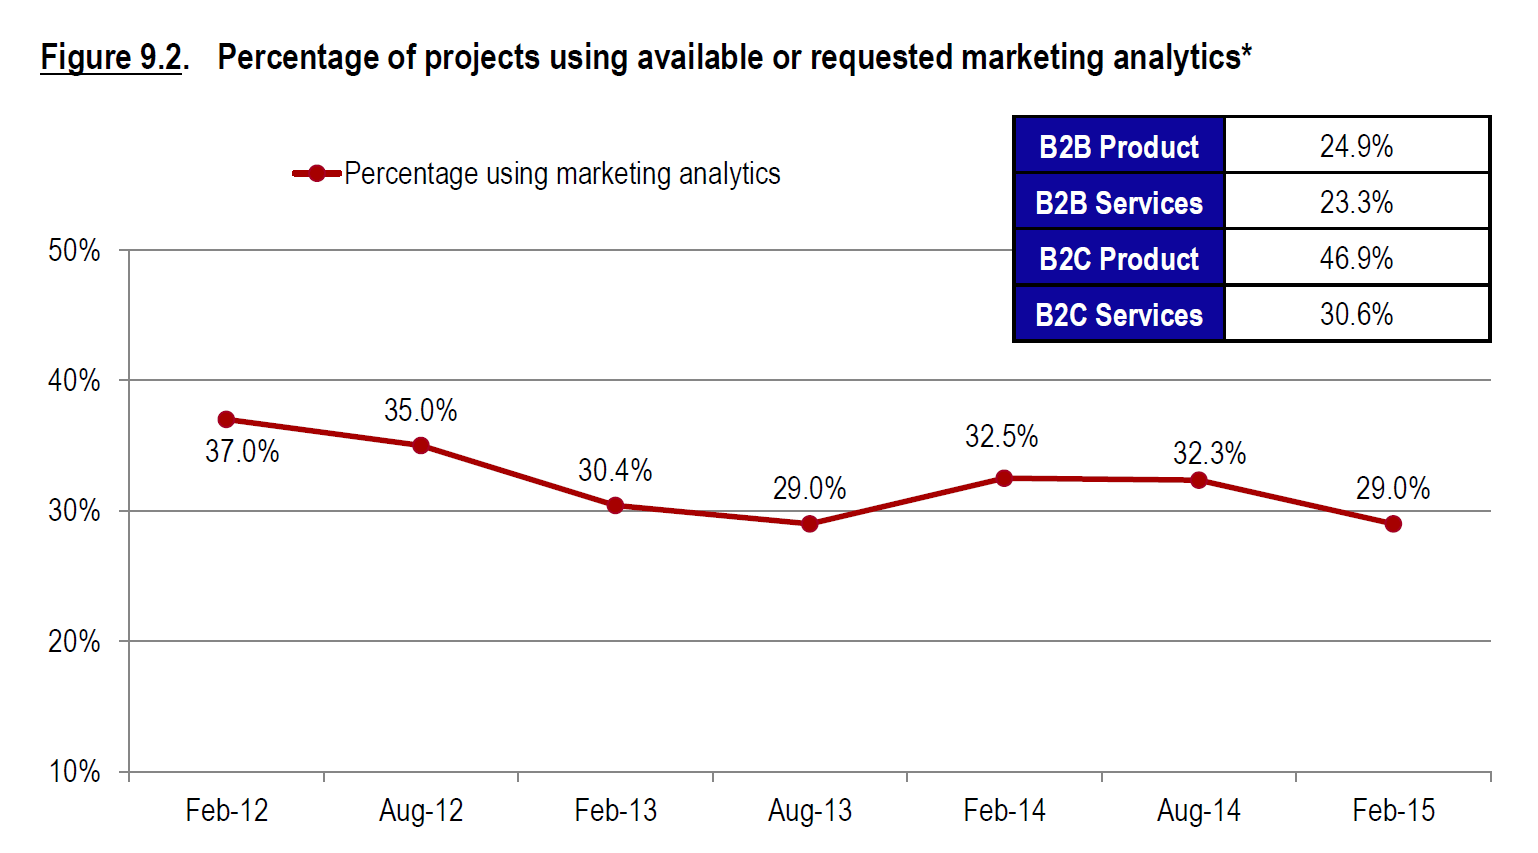 Percentage of projects using marketing analytics